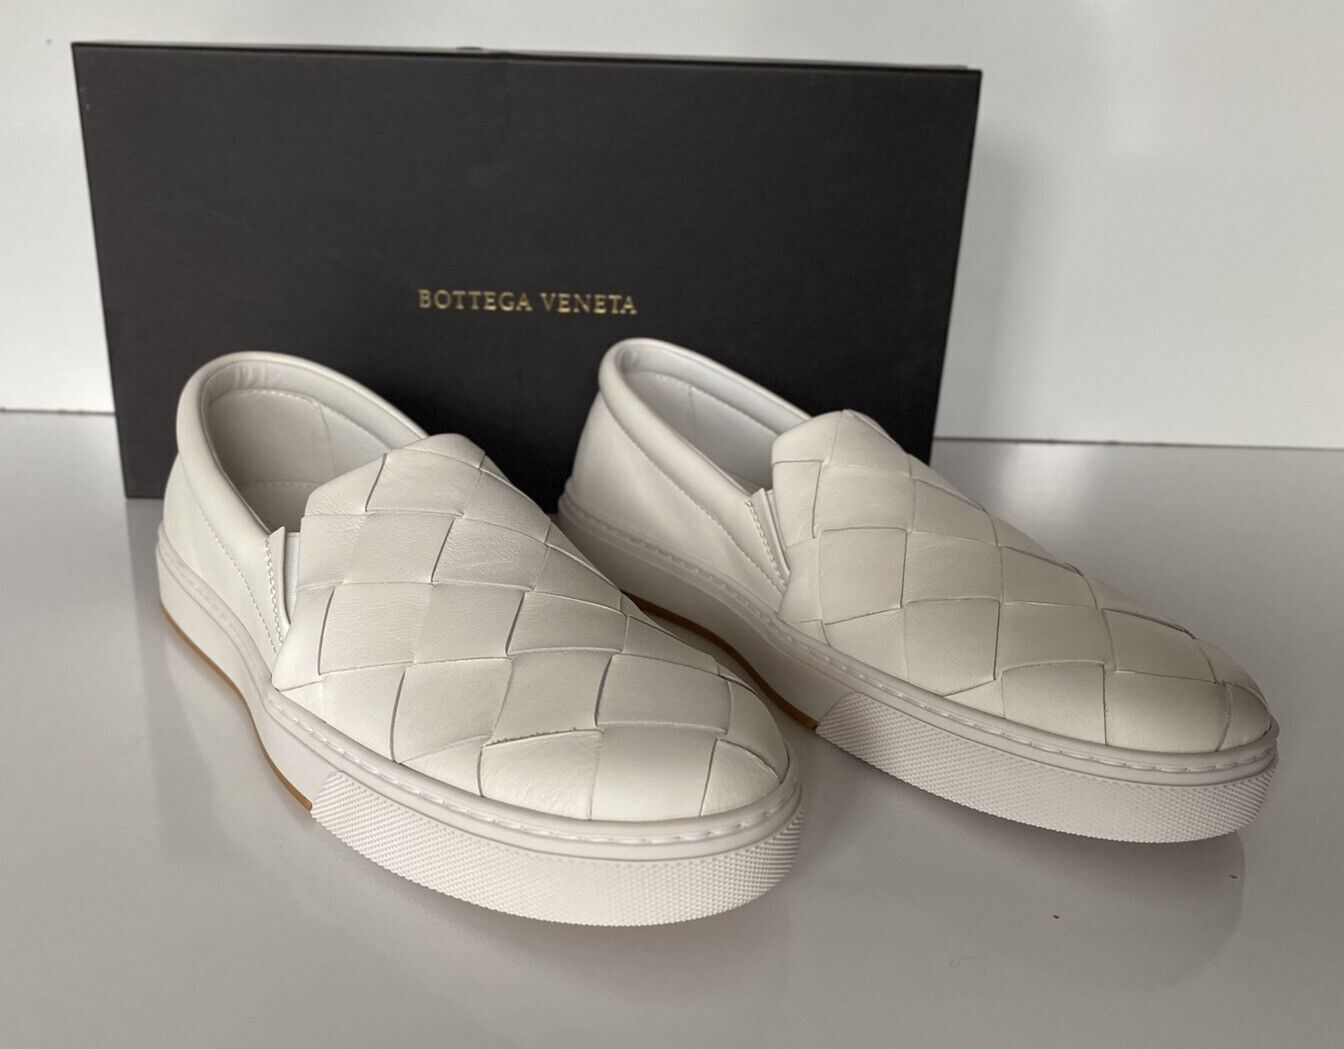 NIB $760 Bottega Veneta Rubber Sole Calf Leather Optic White Shoes 10.5 608751